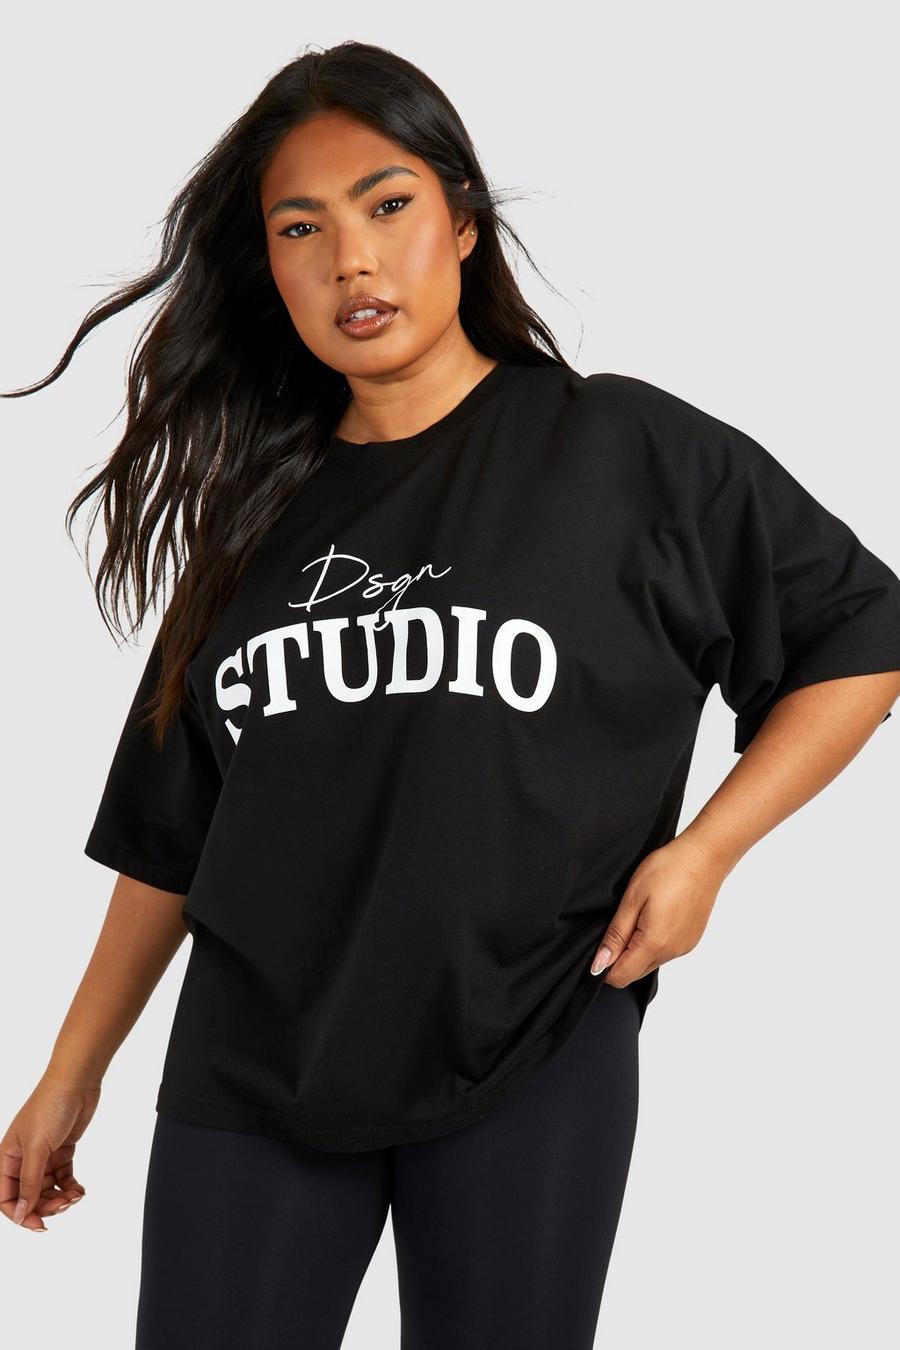 Plus Oversize T-Shirt mit Dsgn Studio Schriftzug, Black image number 1